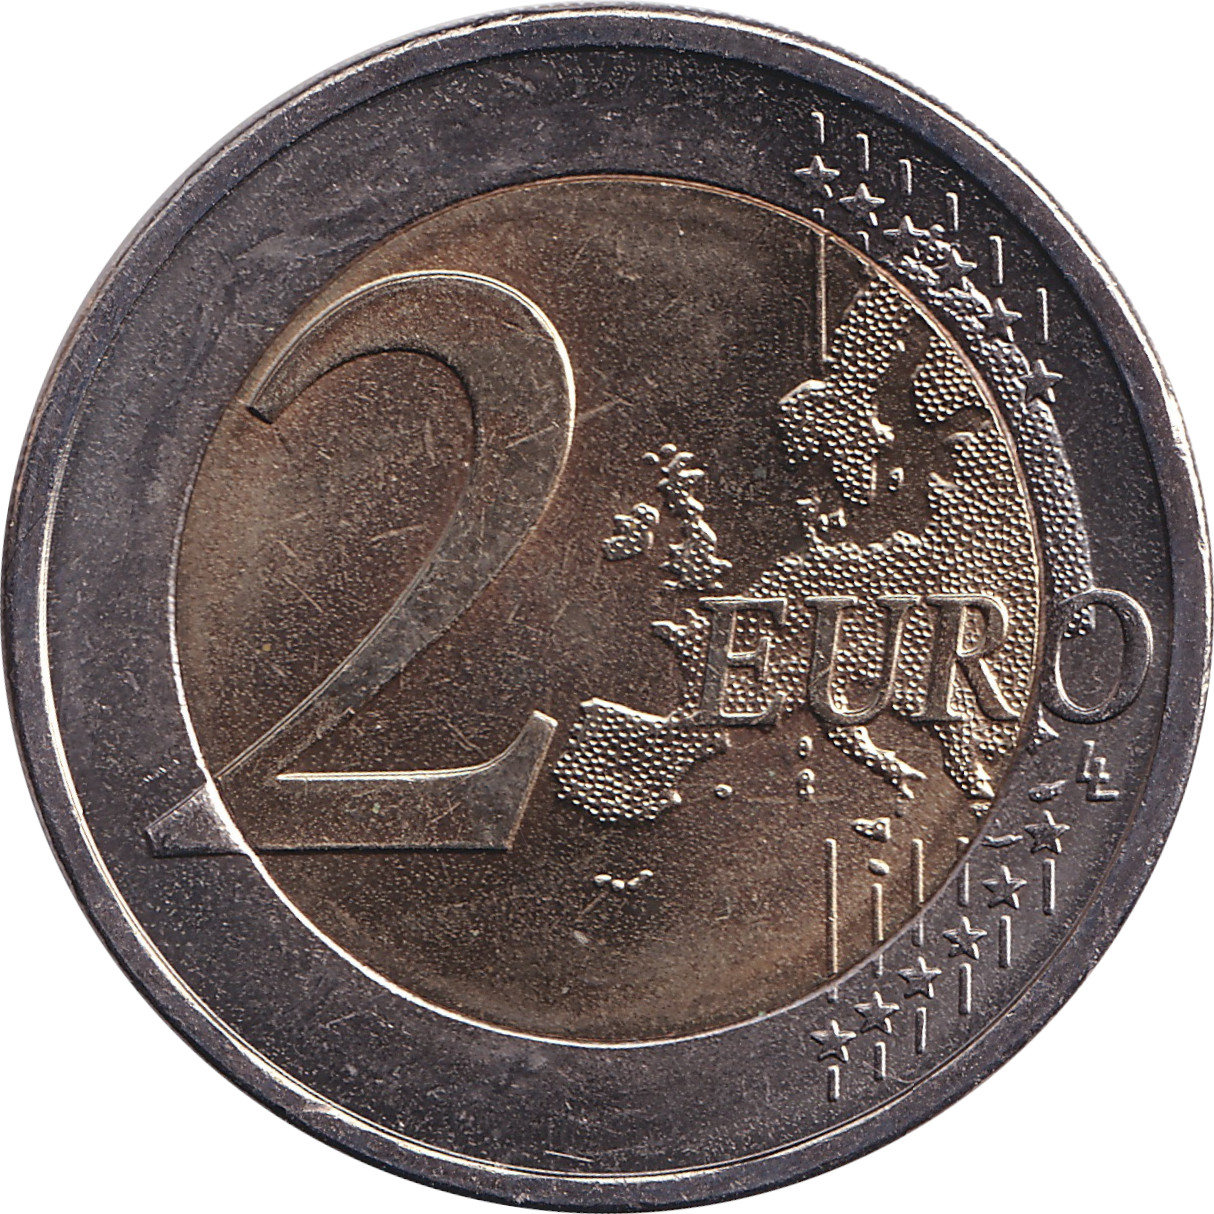 2 euro - Domínikos Theotokópoulos